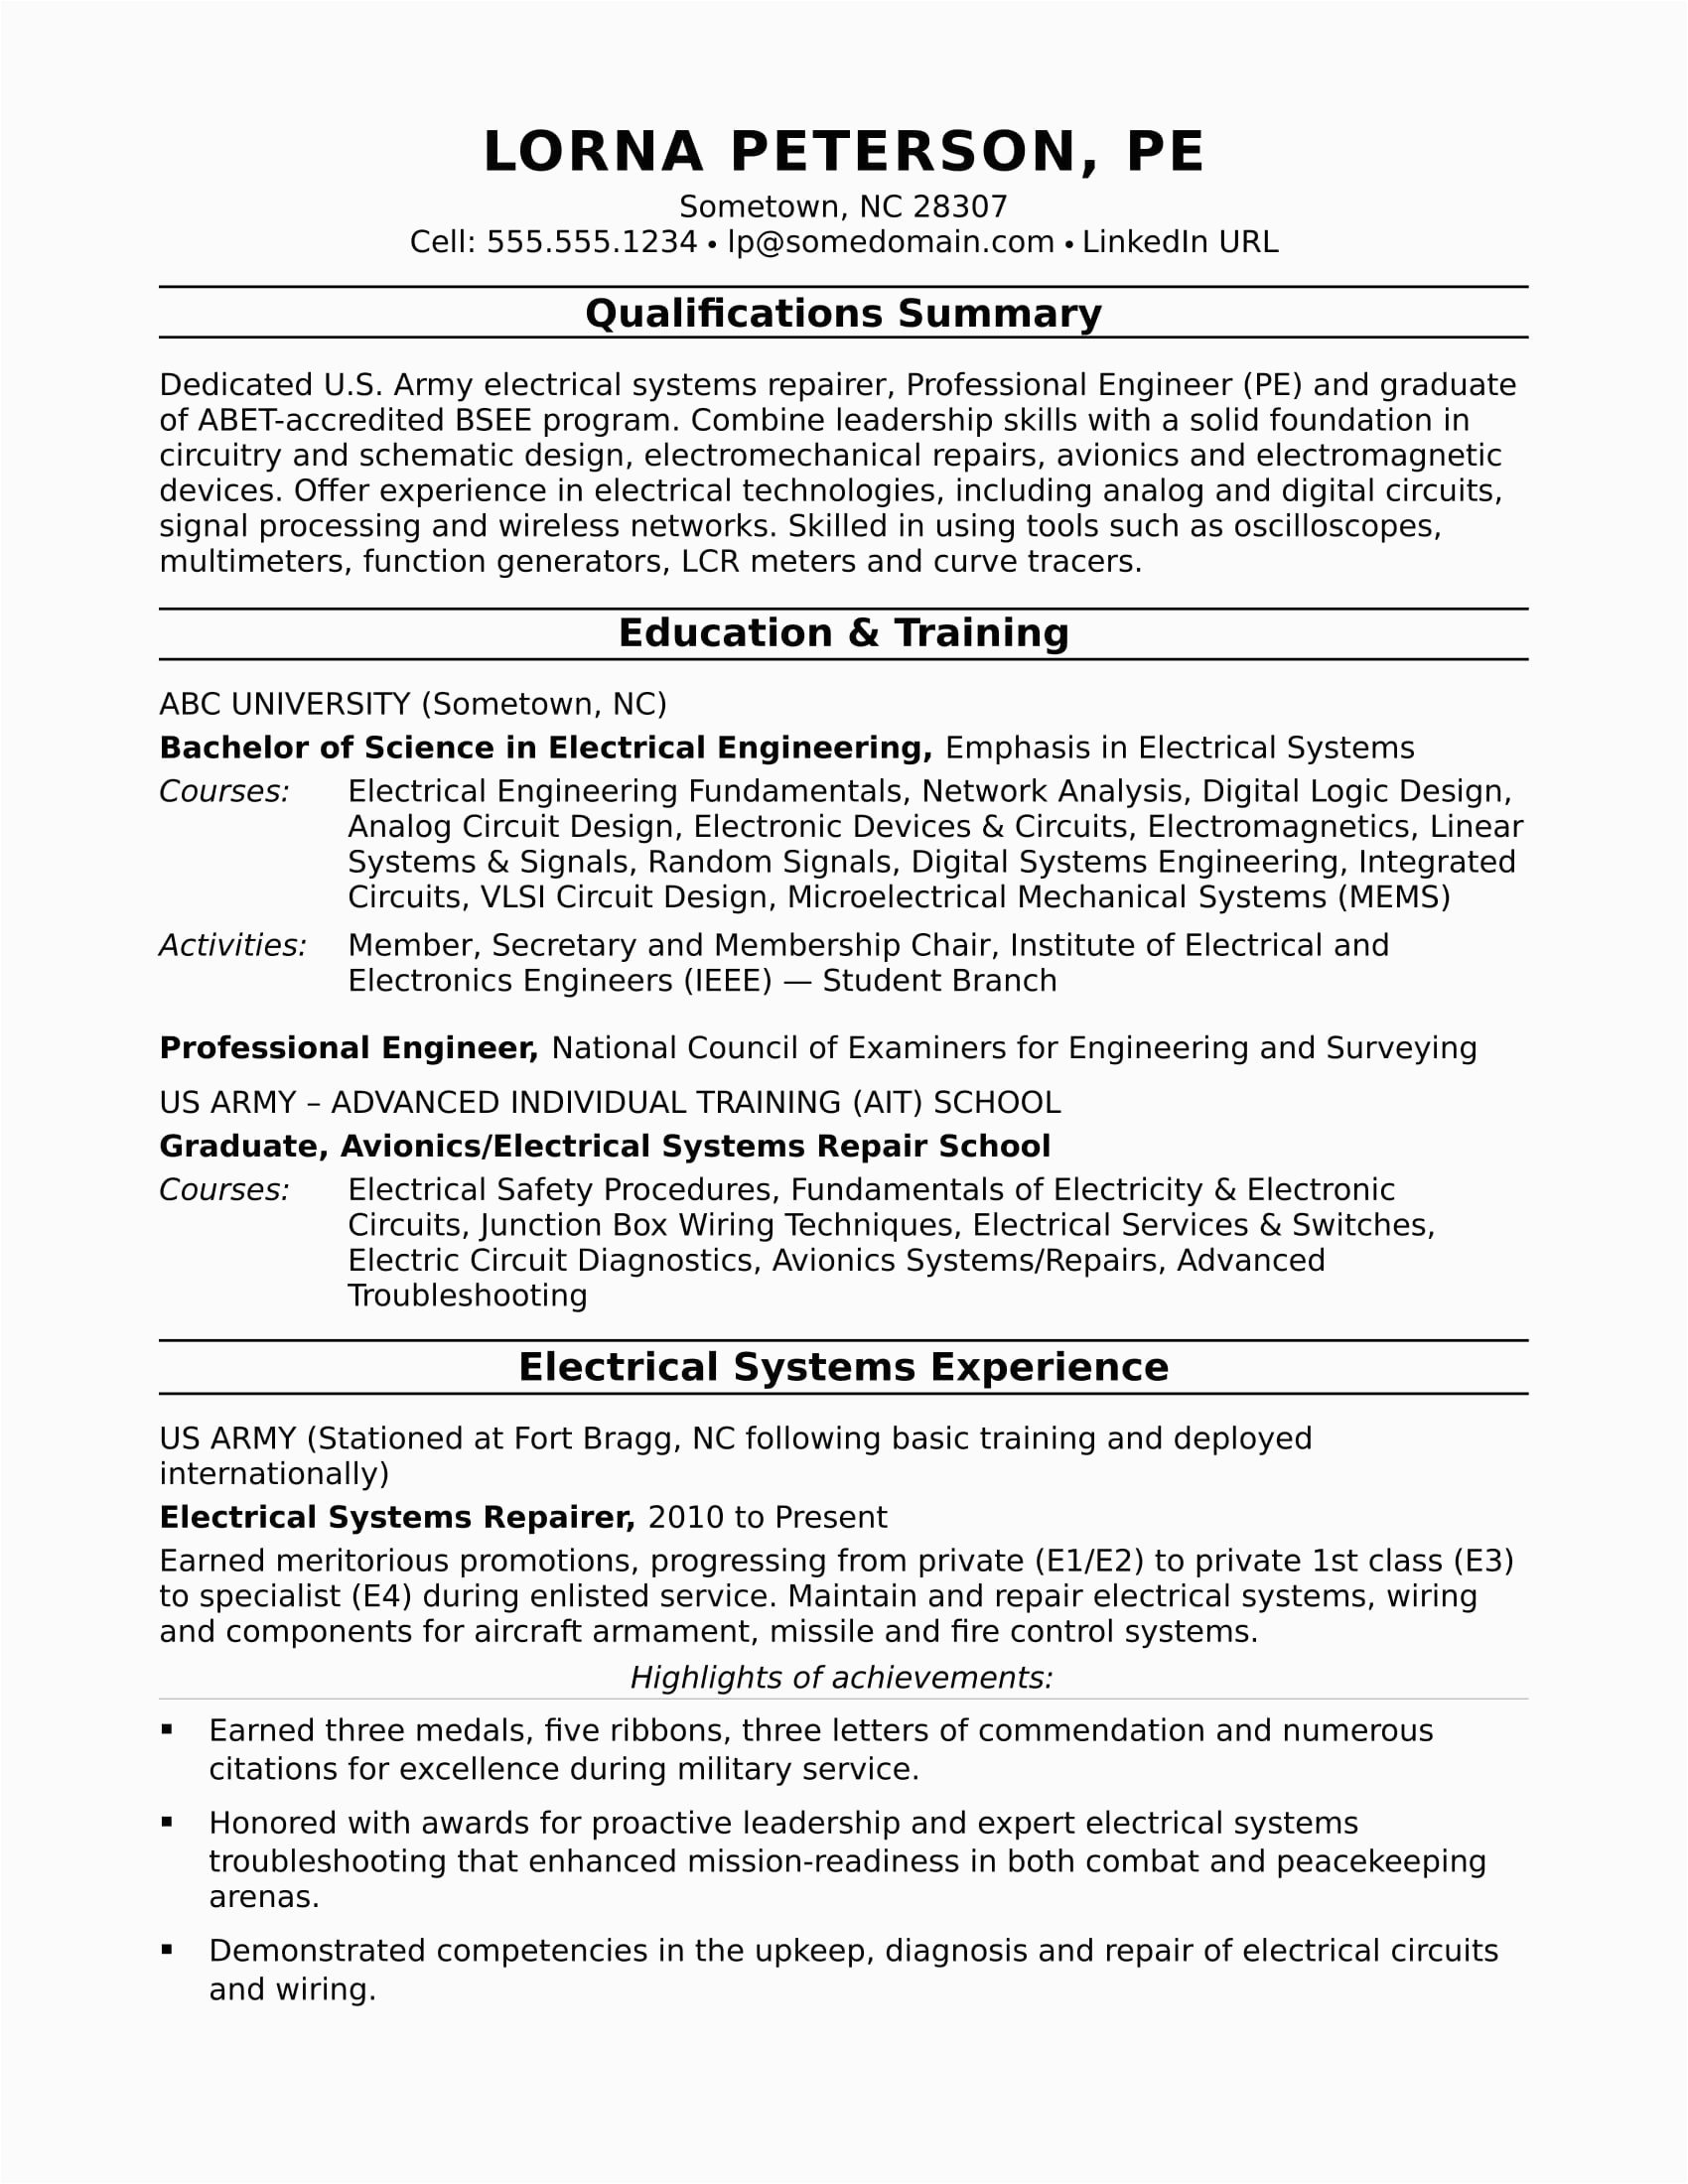 Electronics Hardware Testing Engineer Resume Sample Good Resume for Electronics Engineer Electronic Engineer Resume